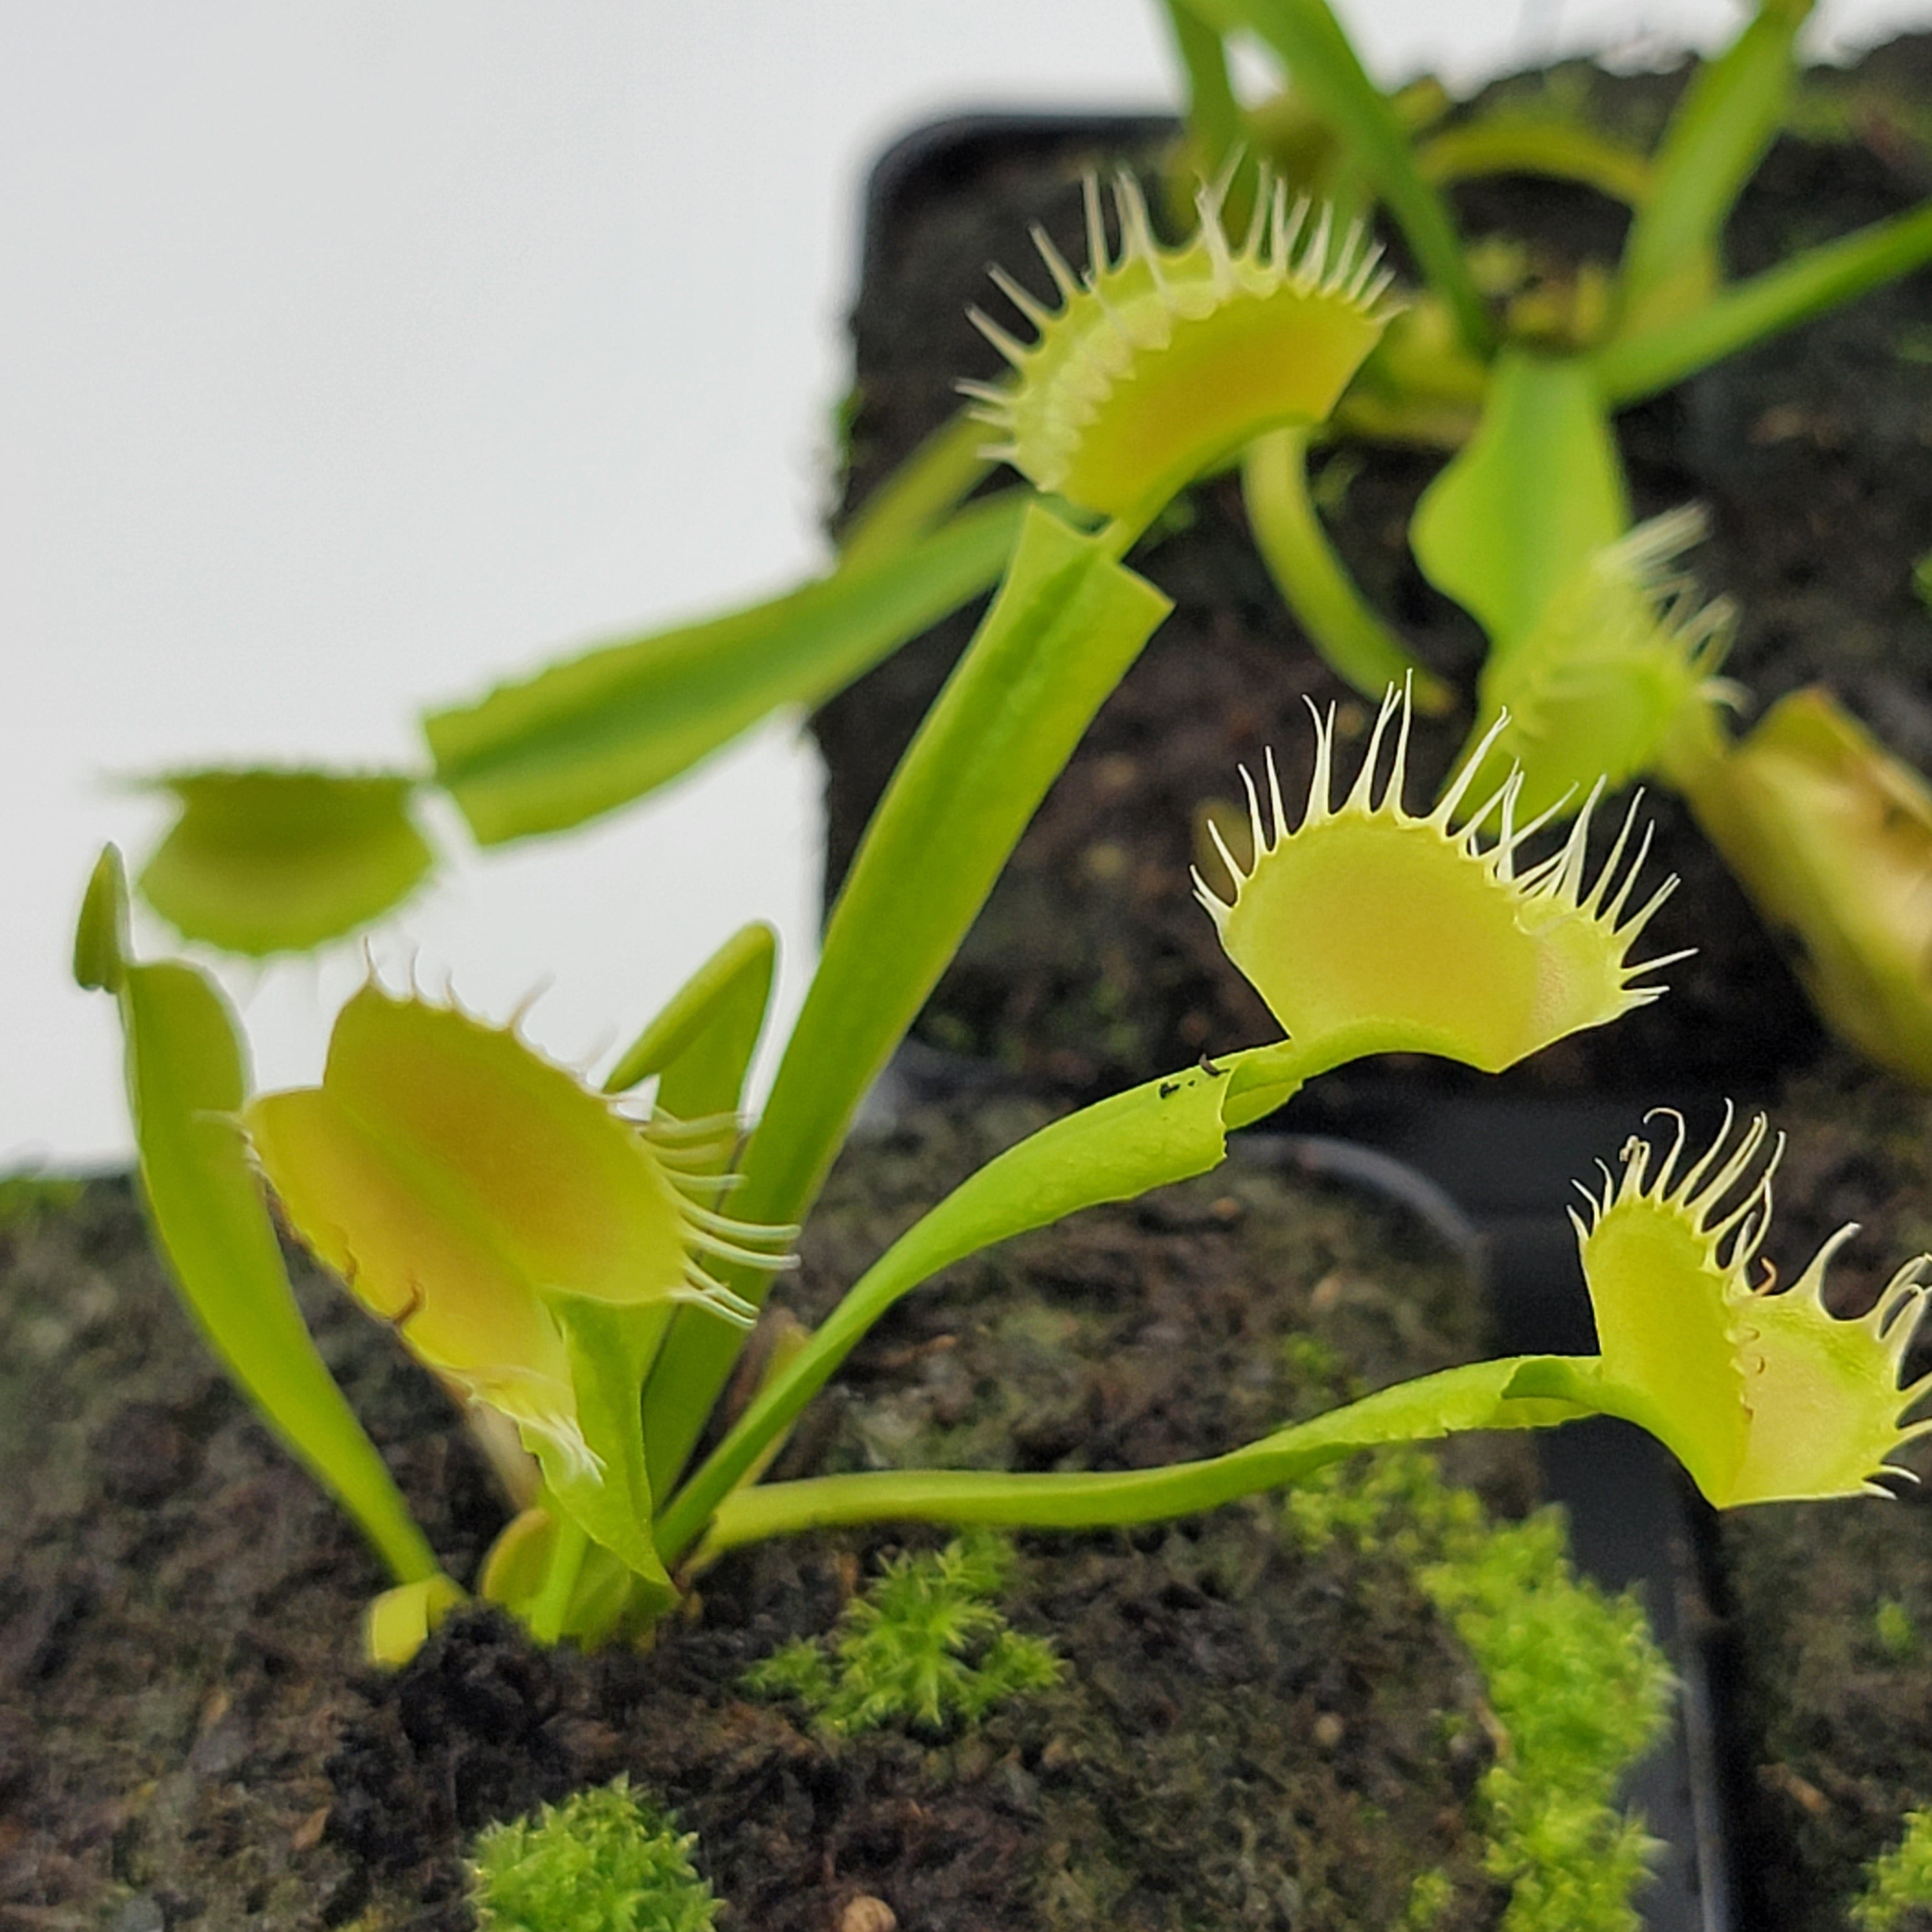 Venus flytrap (Dionaea muscipula) 'Crispy sun' - Rainbow Carnivorous Plants LLC